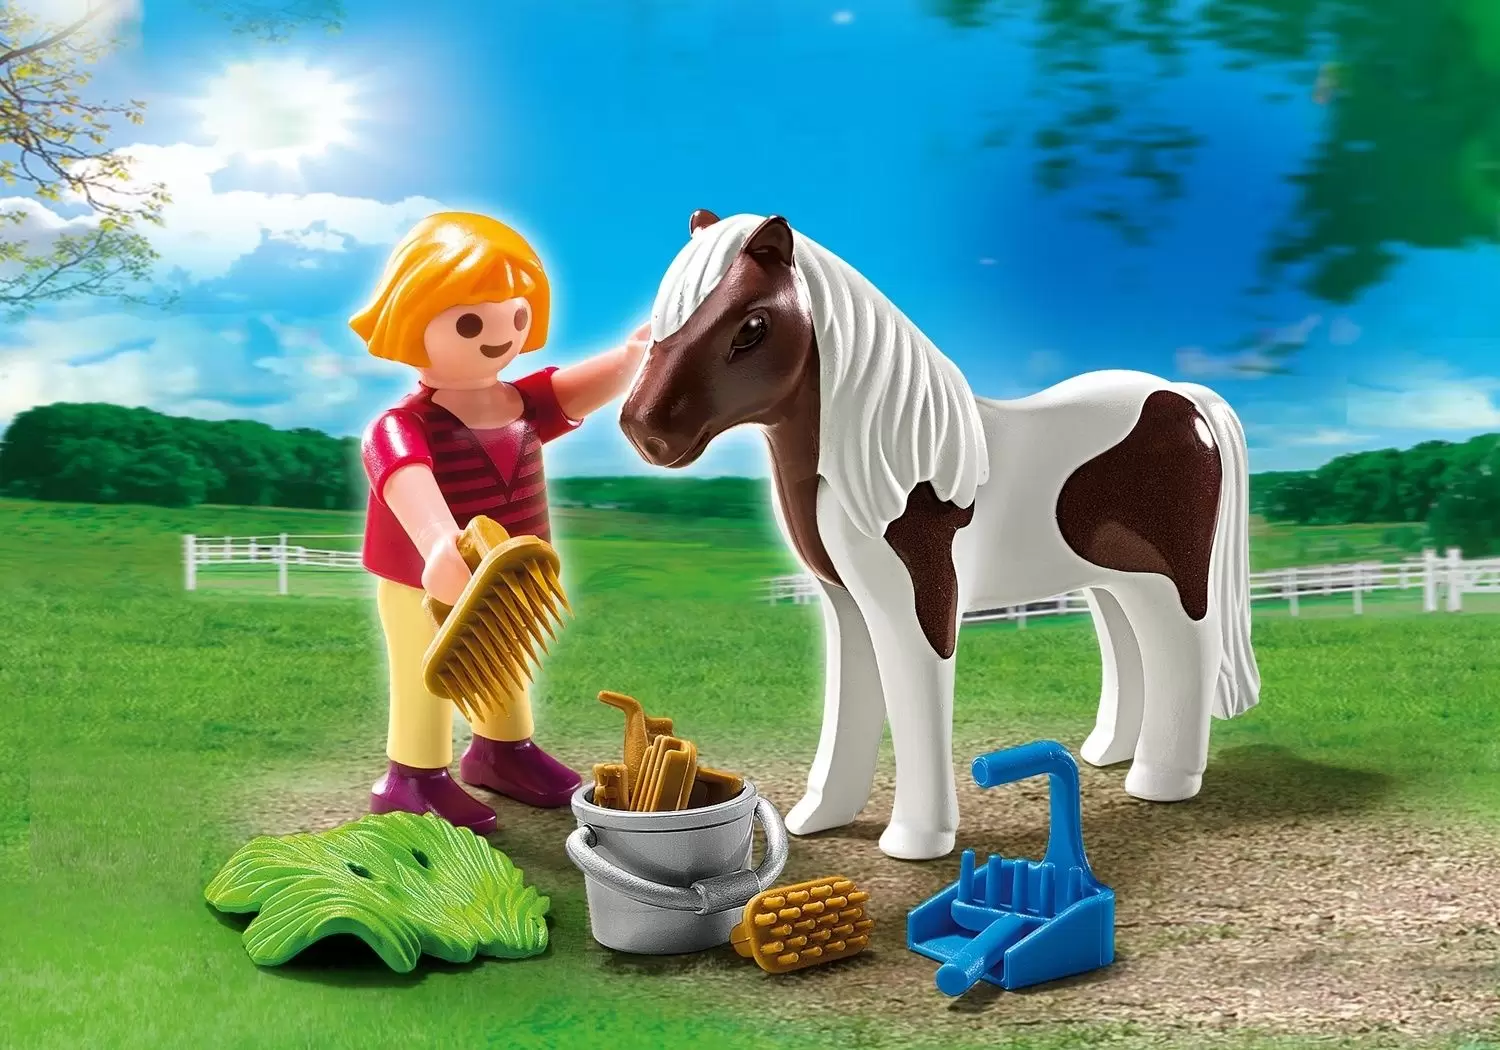 Enfant avec poney - Playmobil SpecialPlus 5291